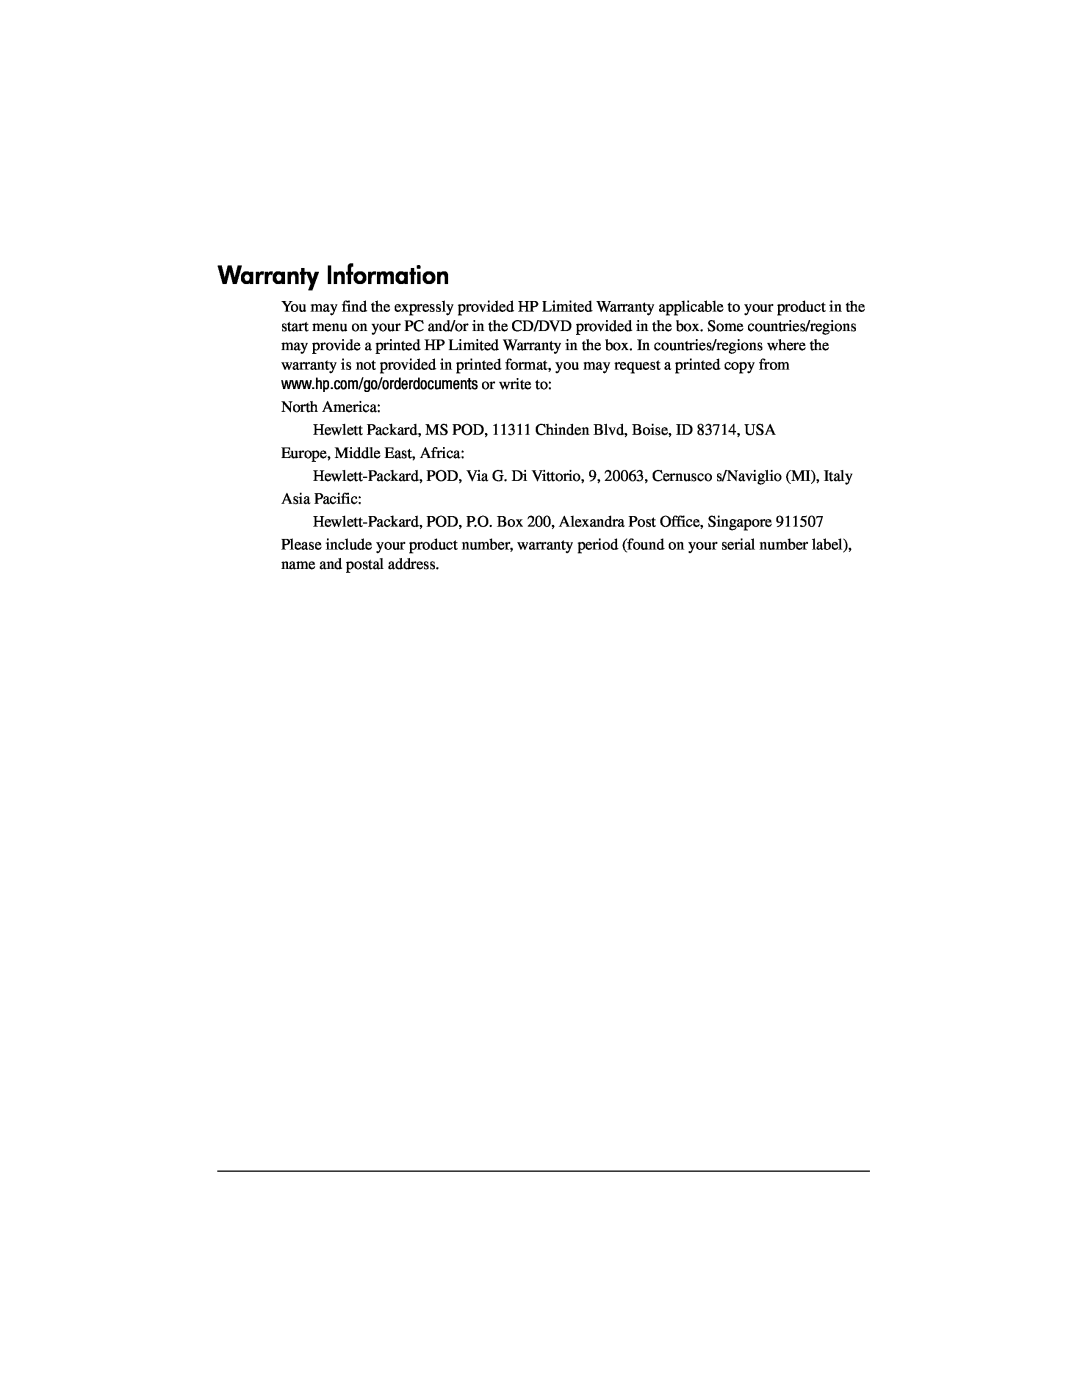 HP CQ62-411NR manual Warranty Information, North America, Hewlett Packard, MS POD, 11311 Chinden Blvd, Boise, ID 83714, USA 